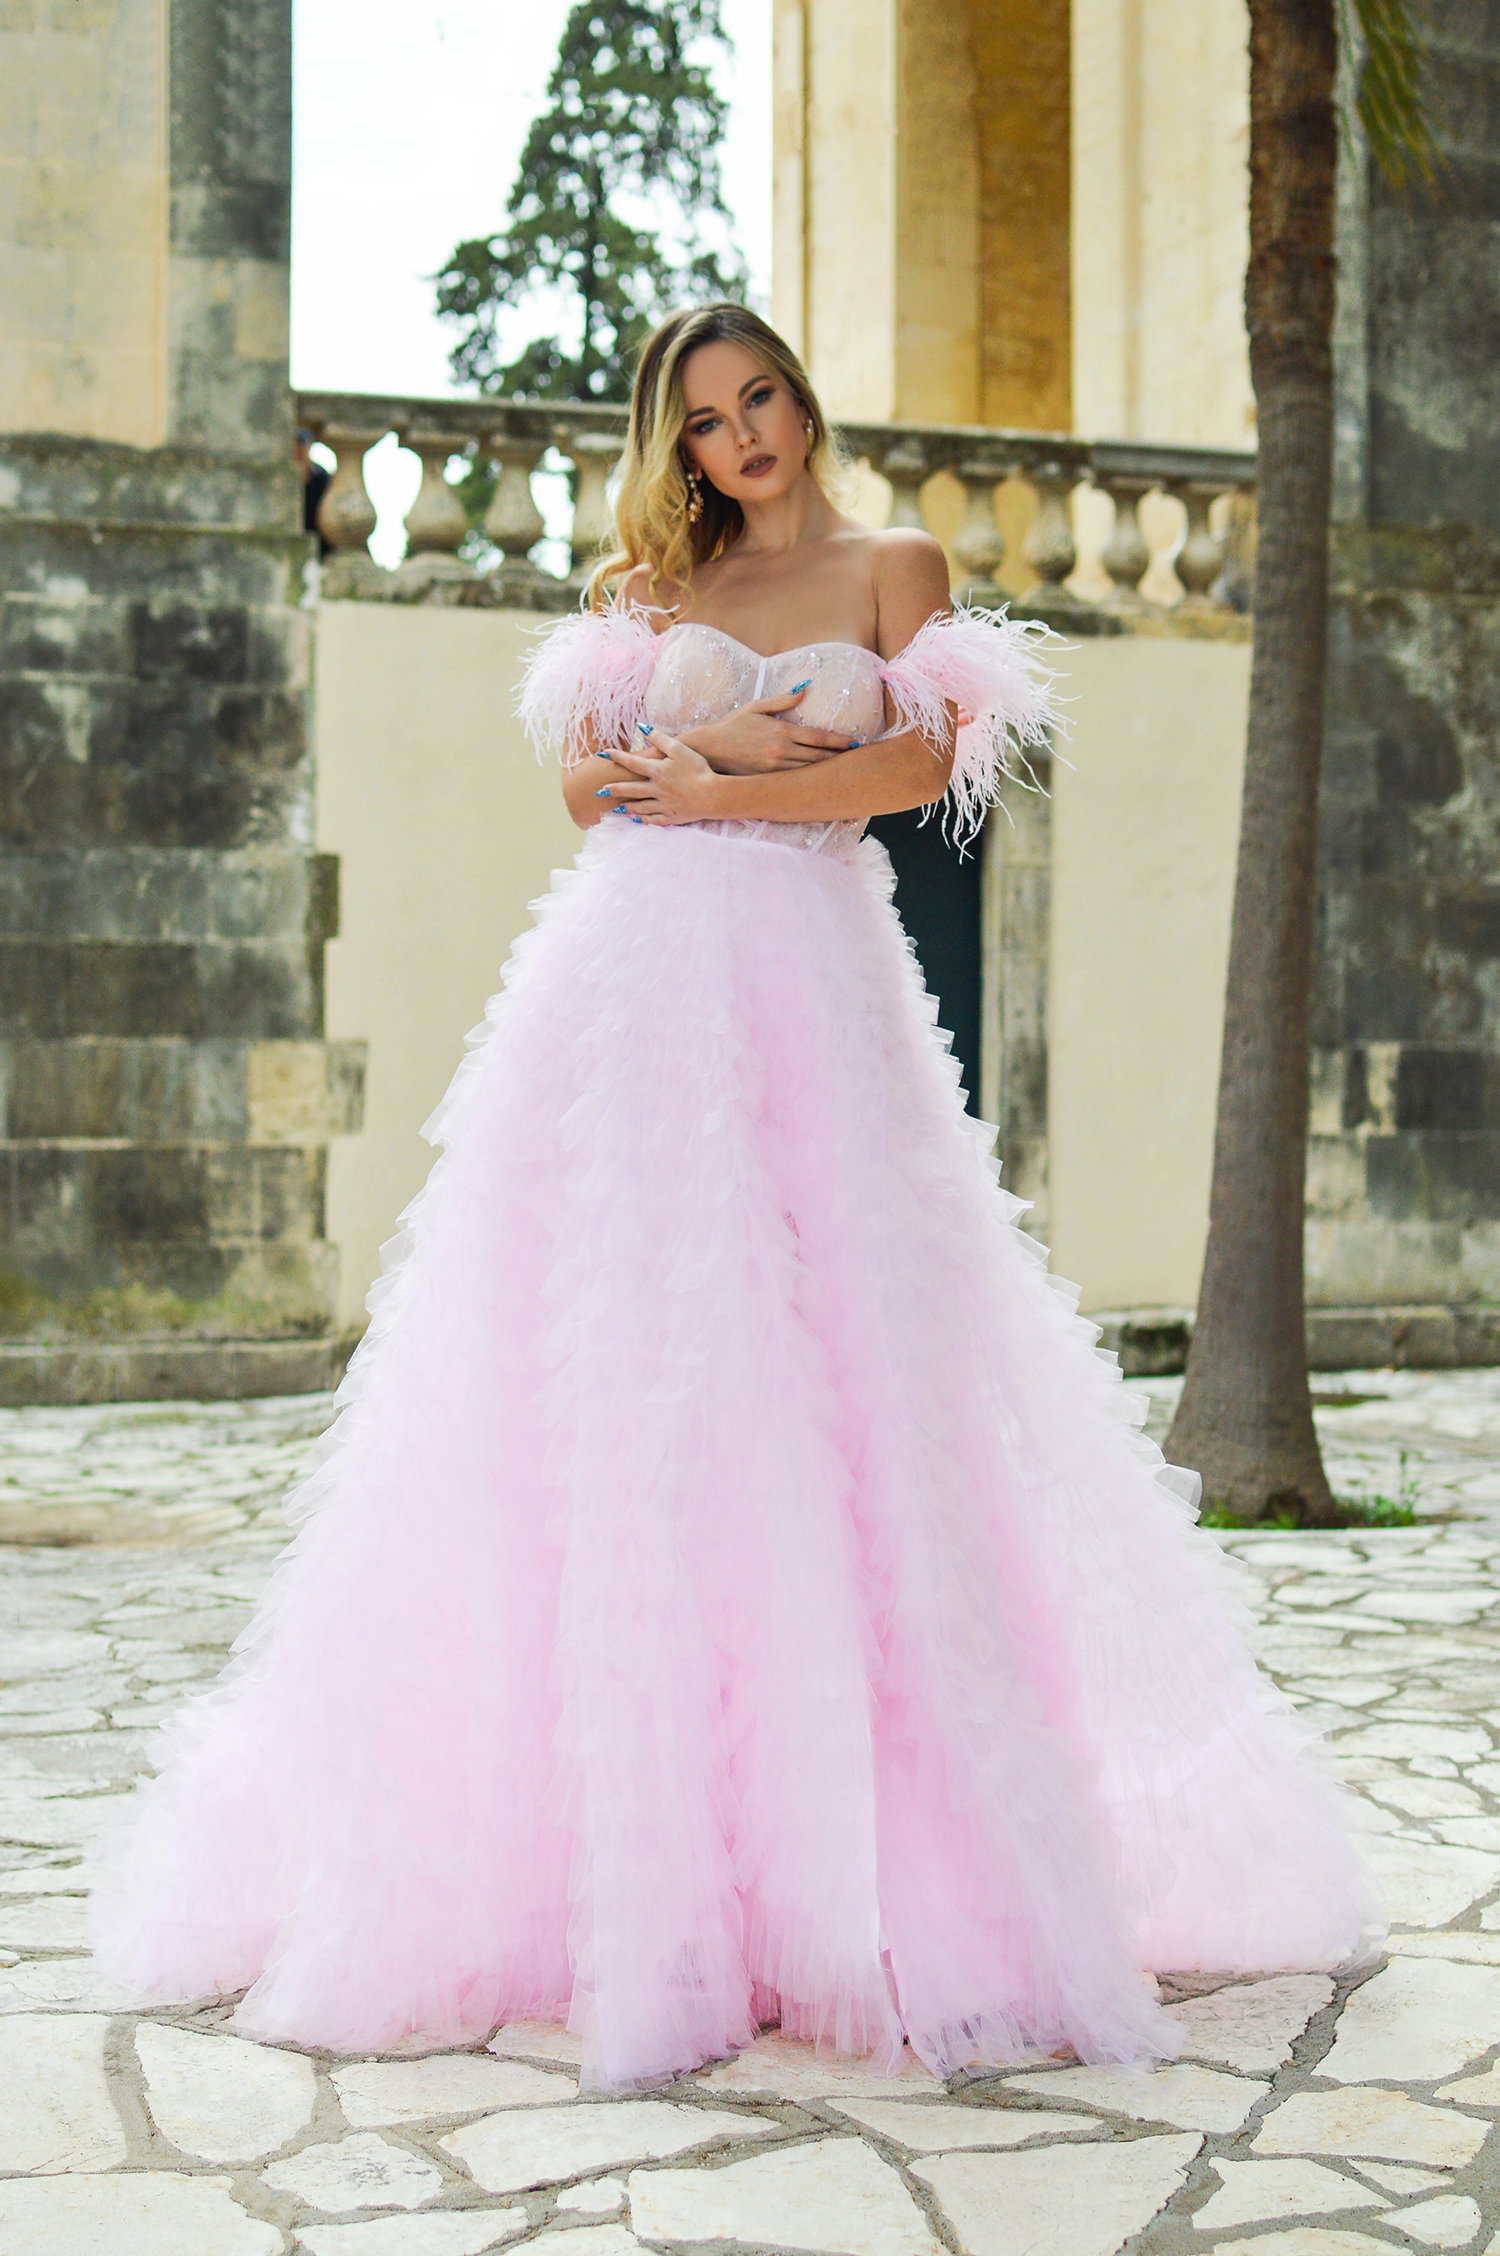 Dreamy Prom Dress by Tamara Bellis